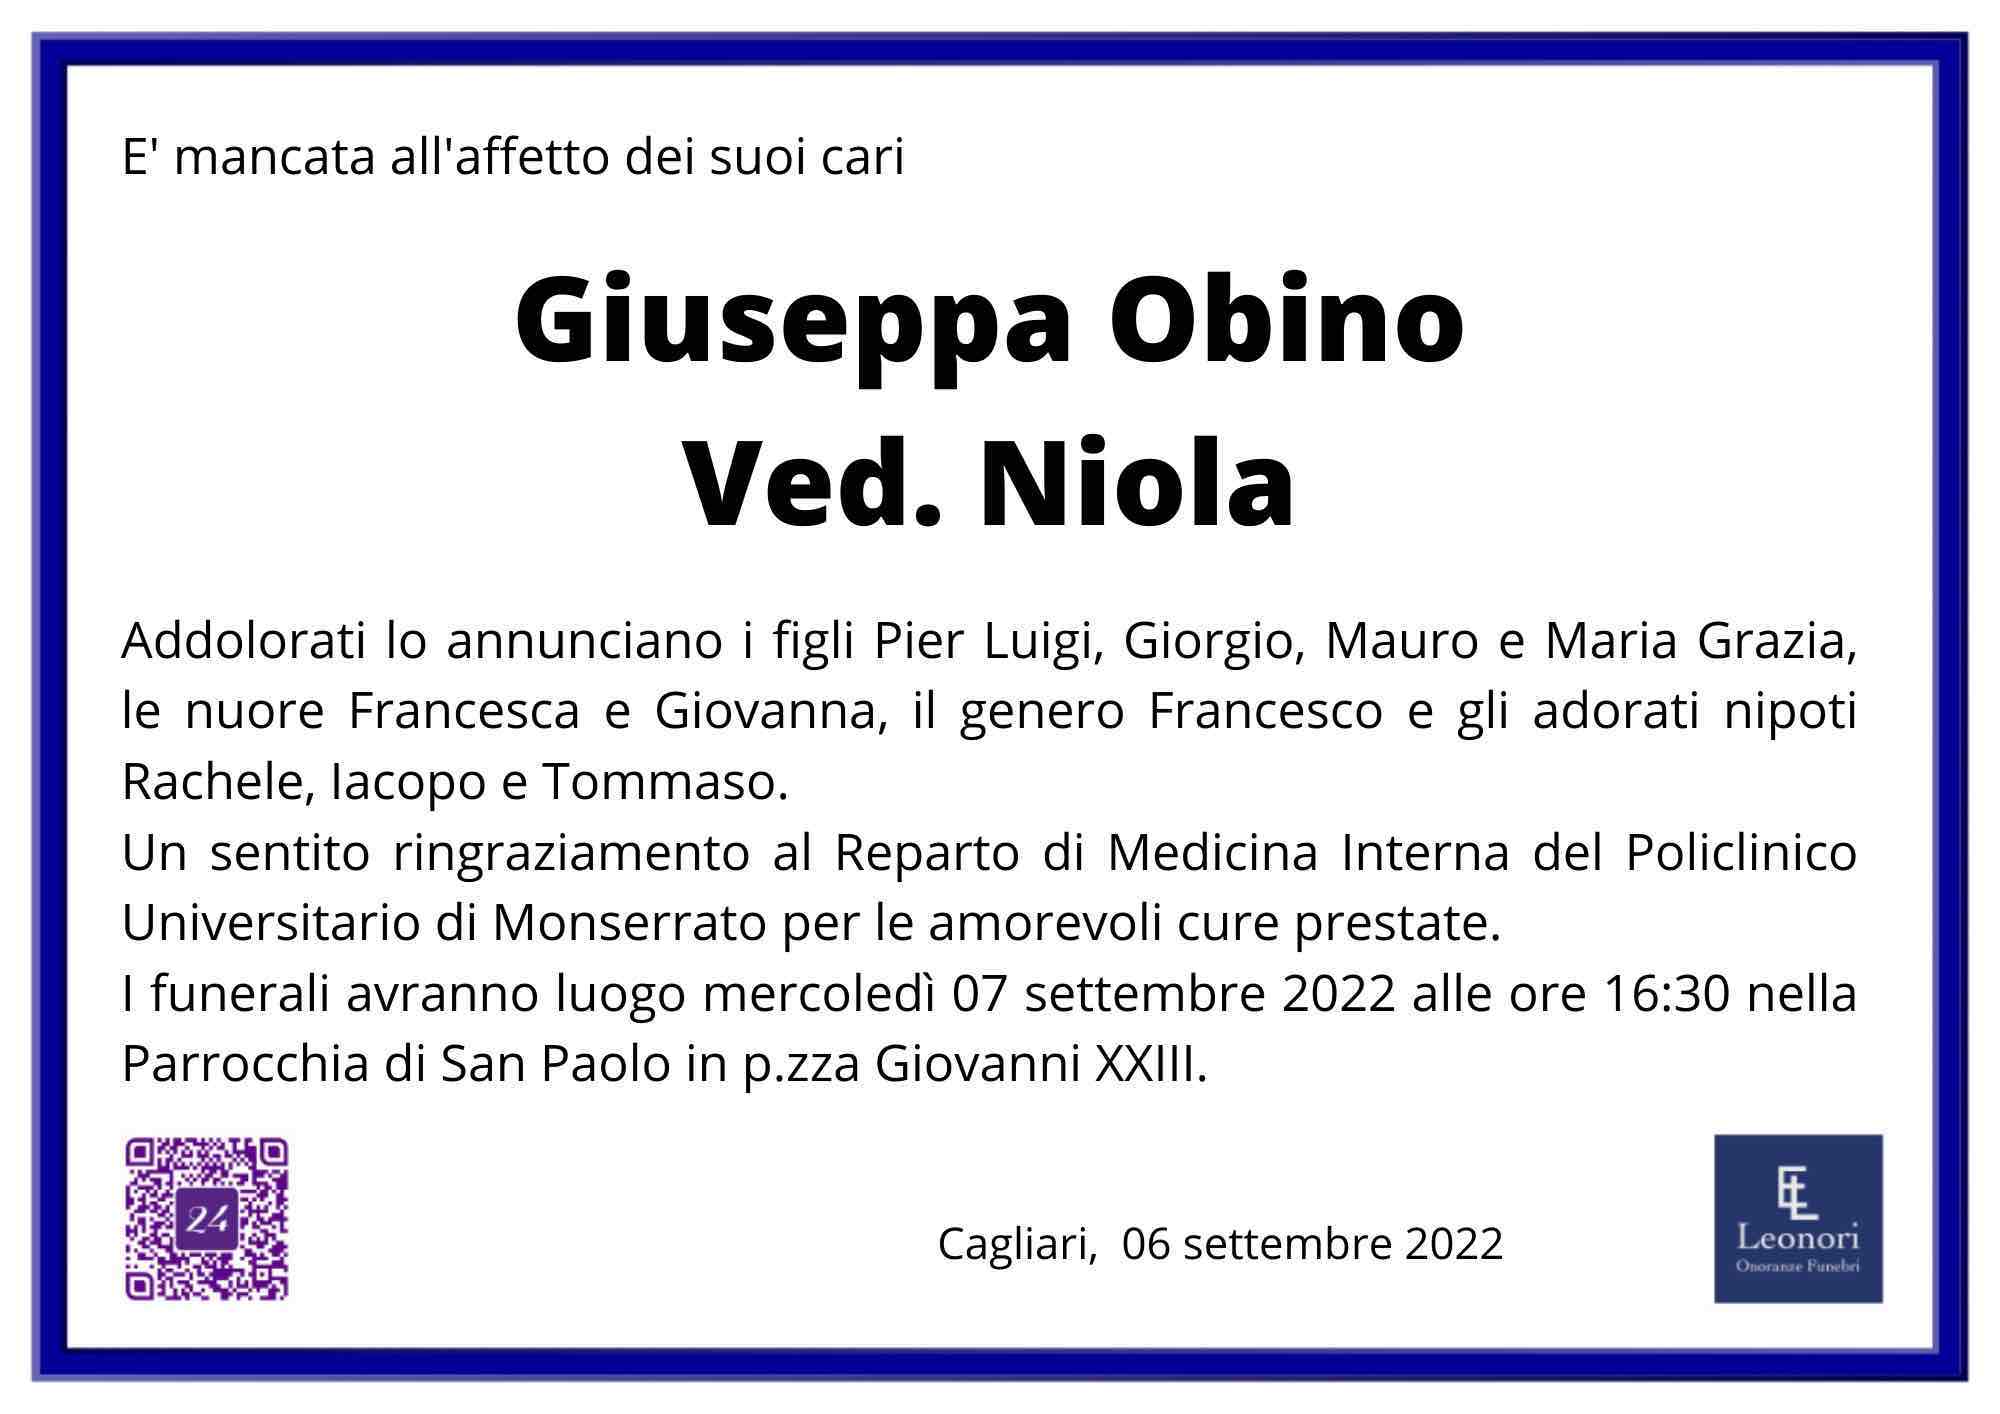 Giuseppa Obino